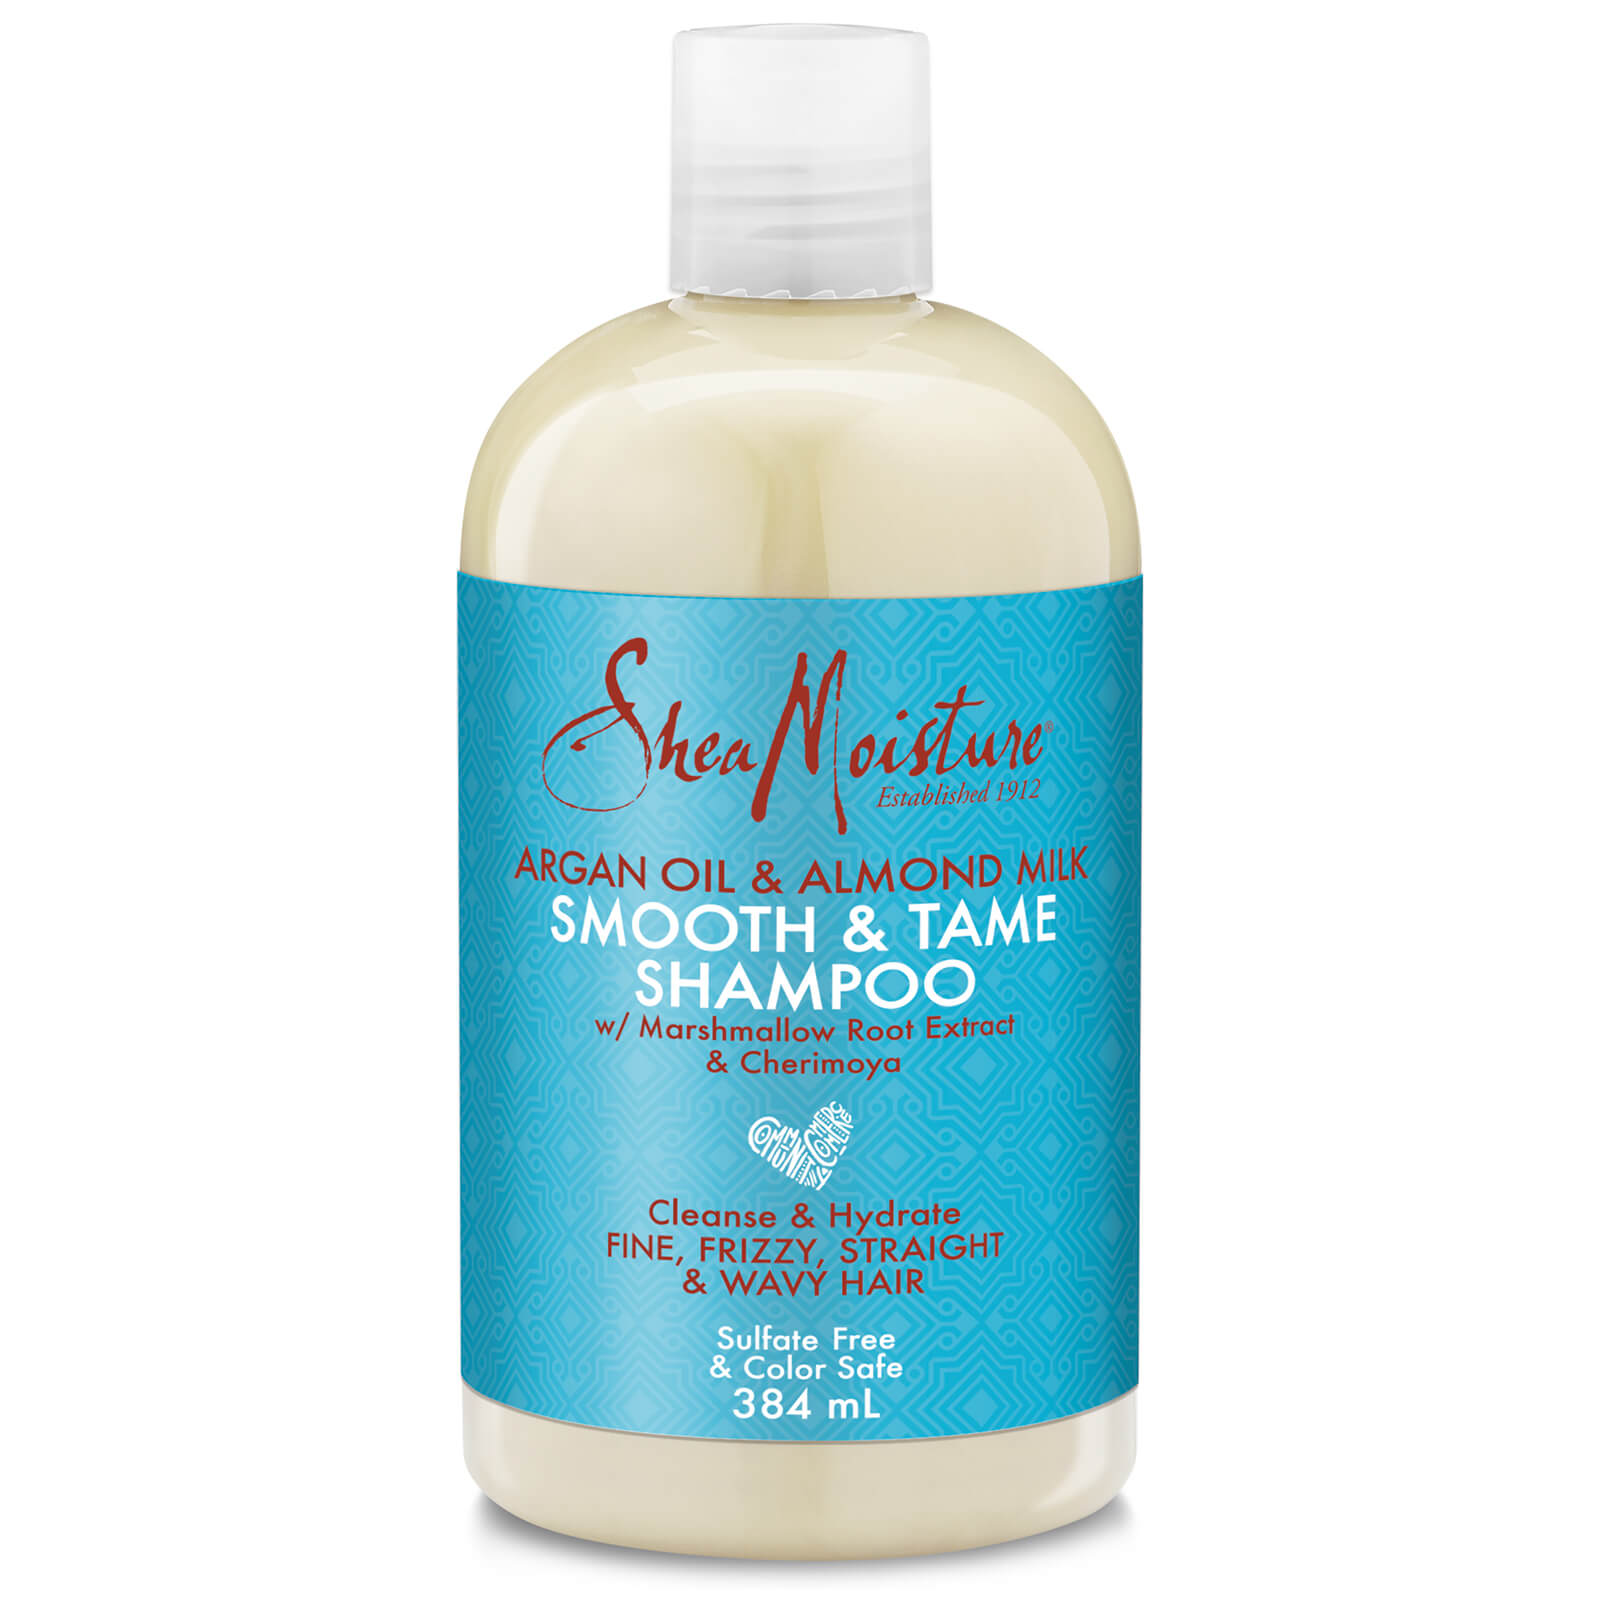 Shea Moisture Argan Oil and Almond Milk Shampoo 384 ml